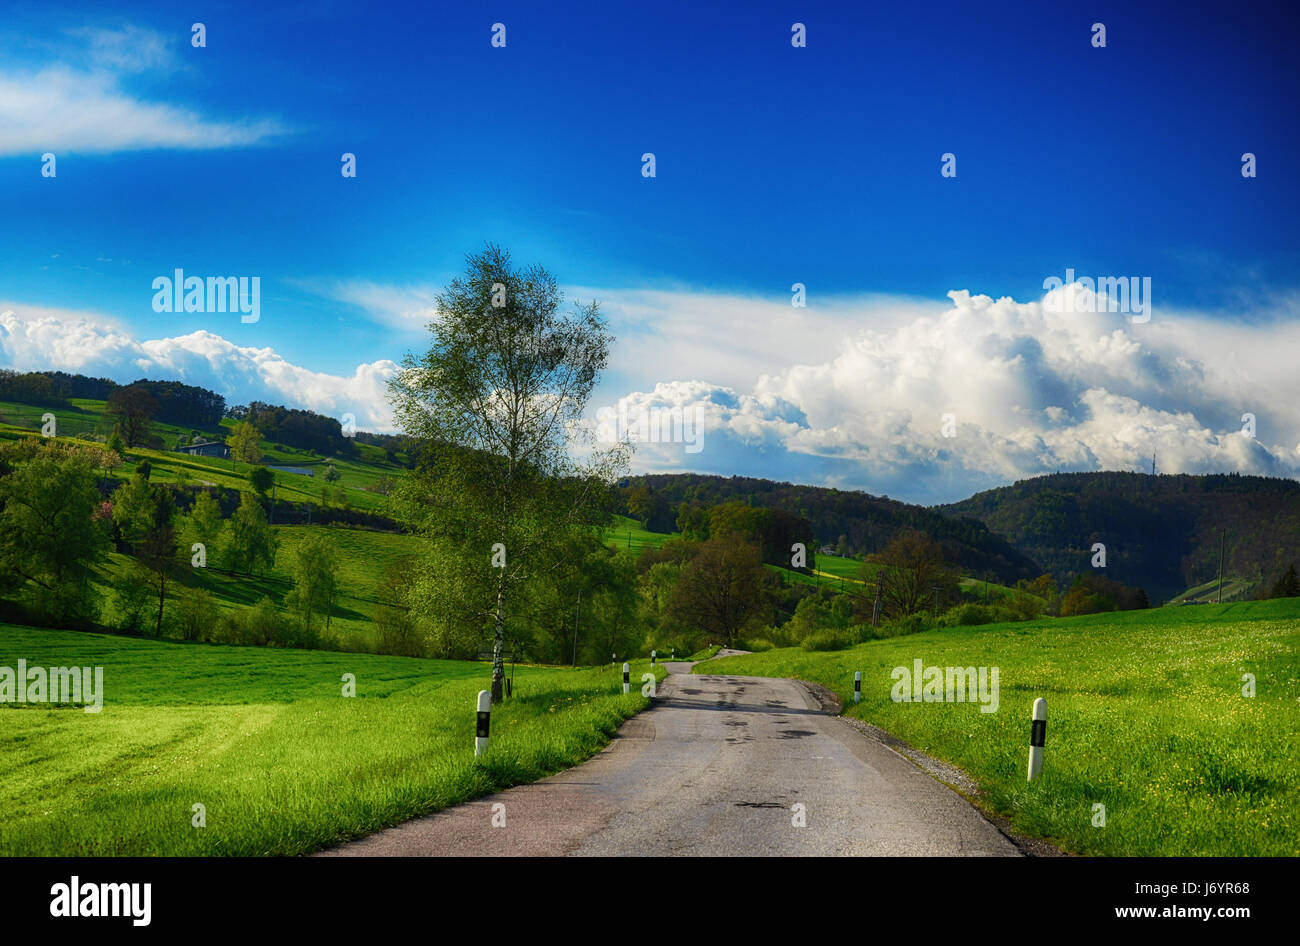 Road through rural landscape, Endingen, Aargau, Switzerland Stock Photo